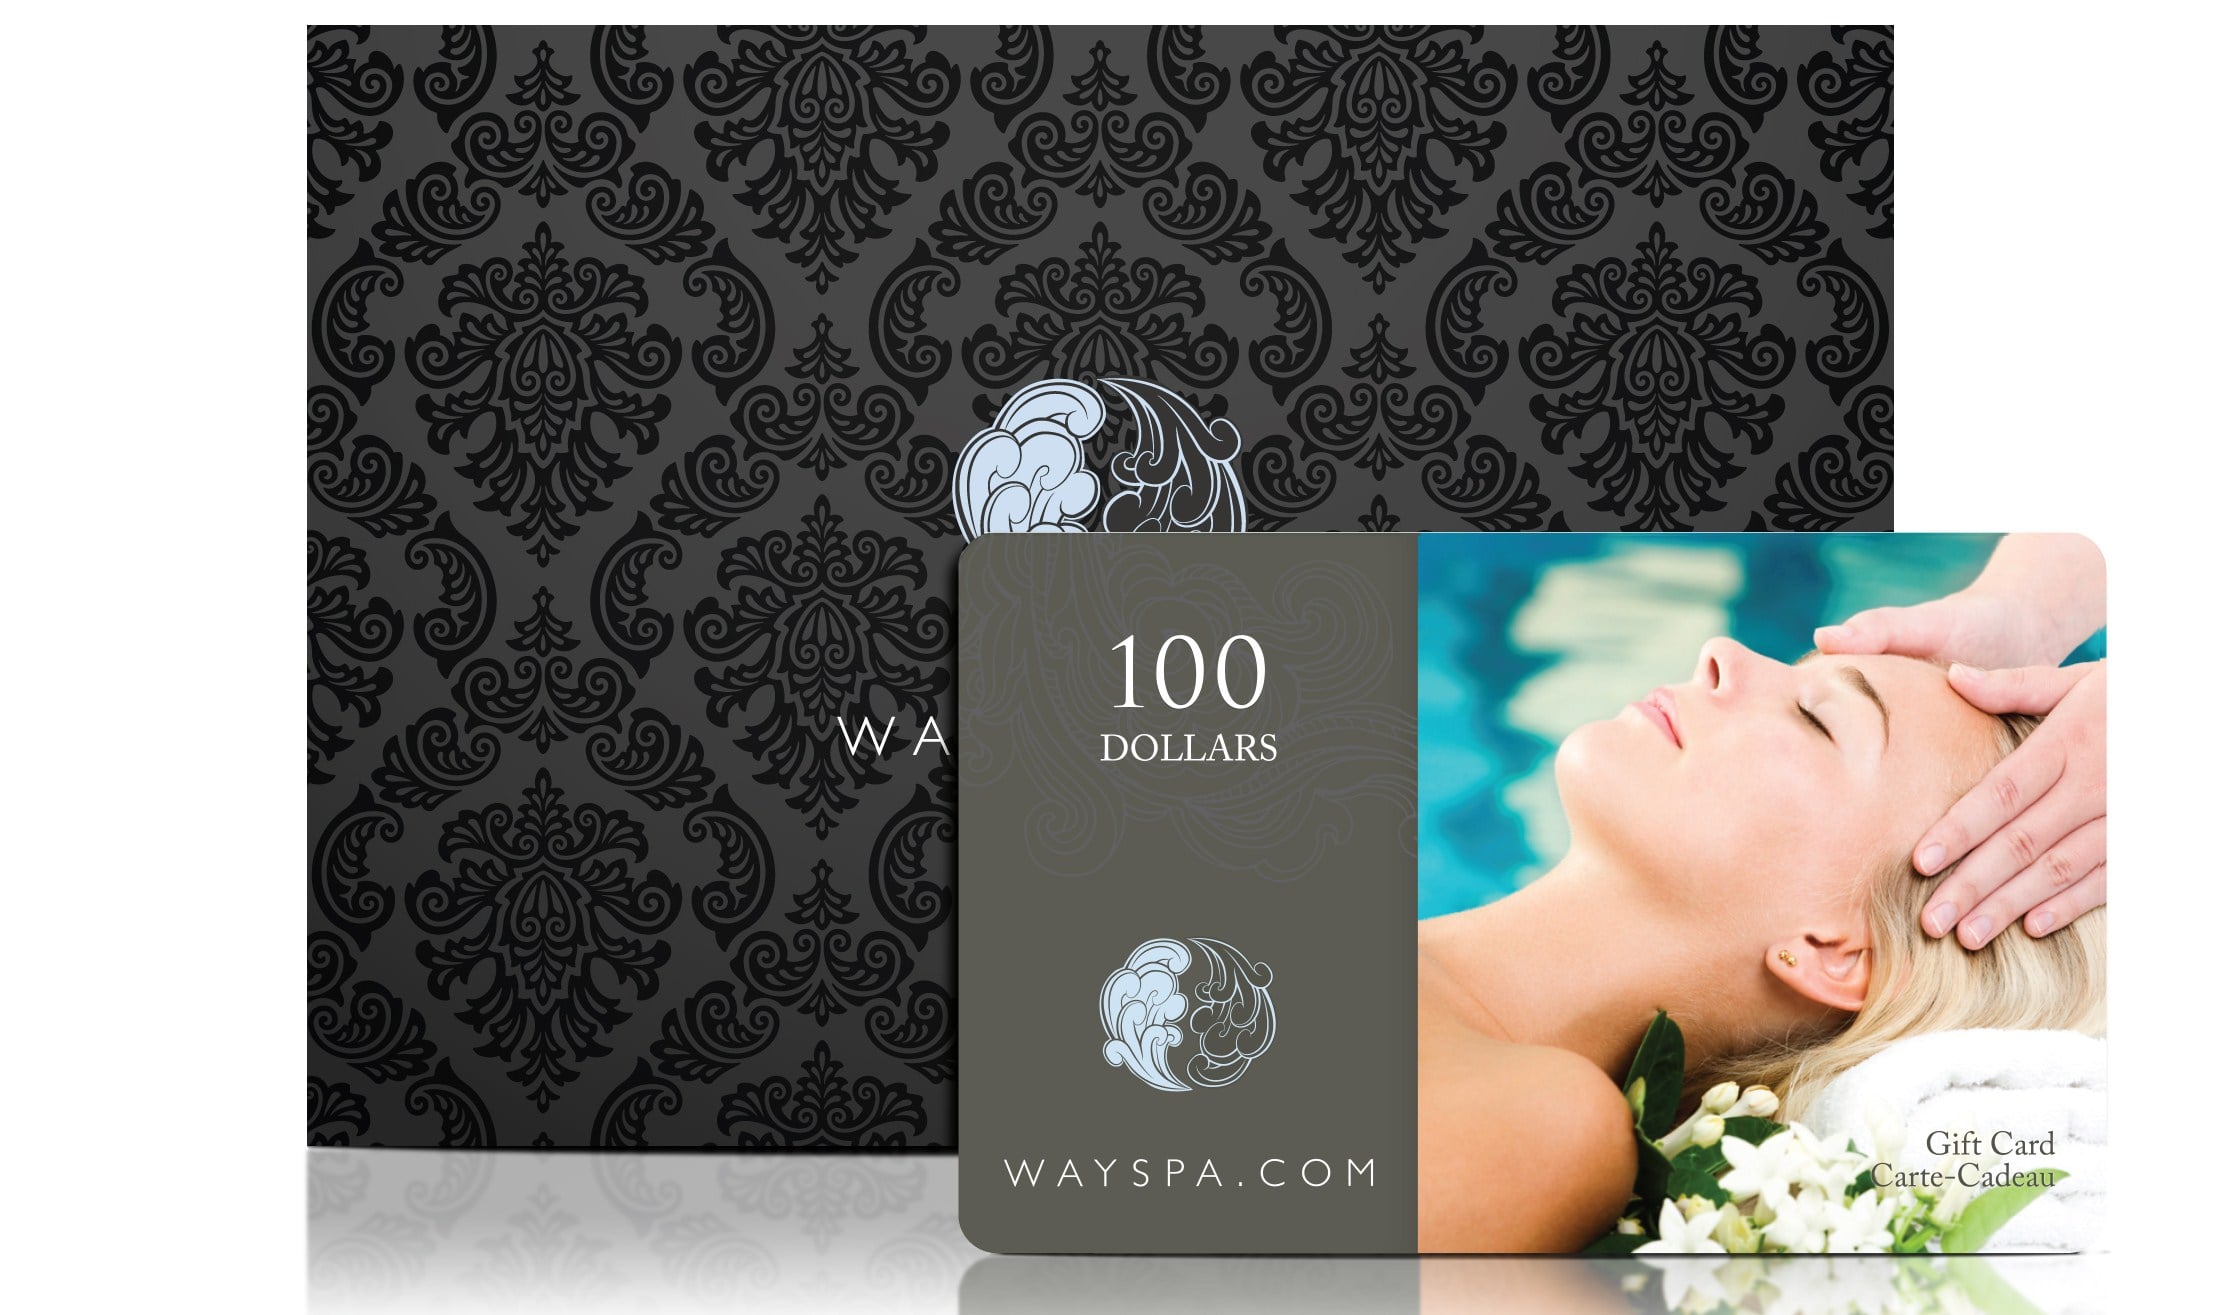 WaySpa-Gift-Card-100